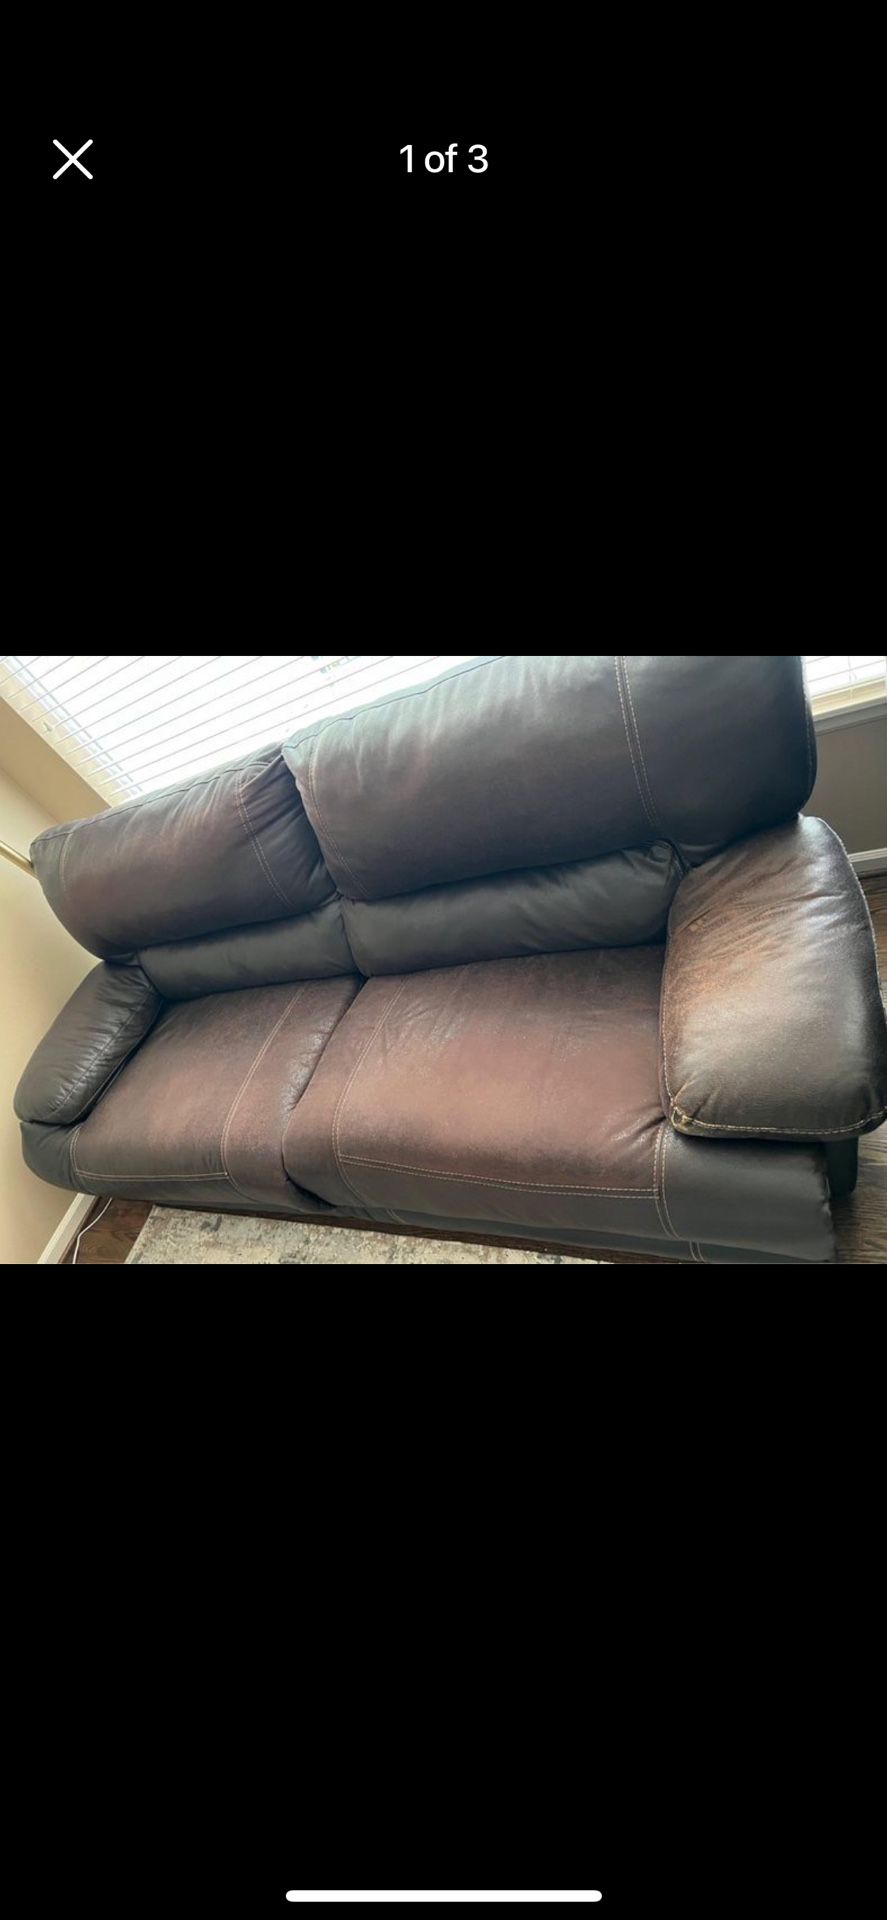 Recliner Sofa - No Damages, Good Condition 